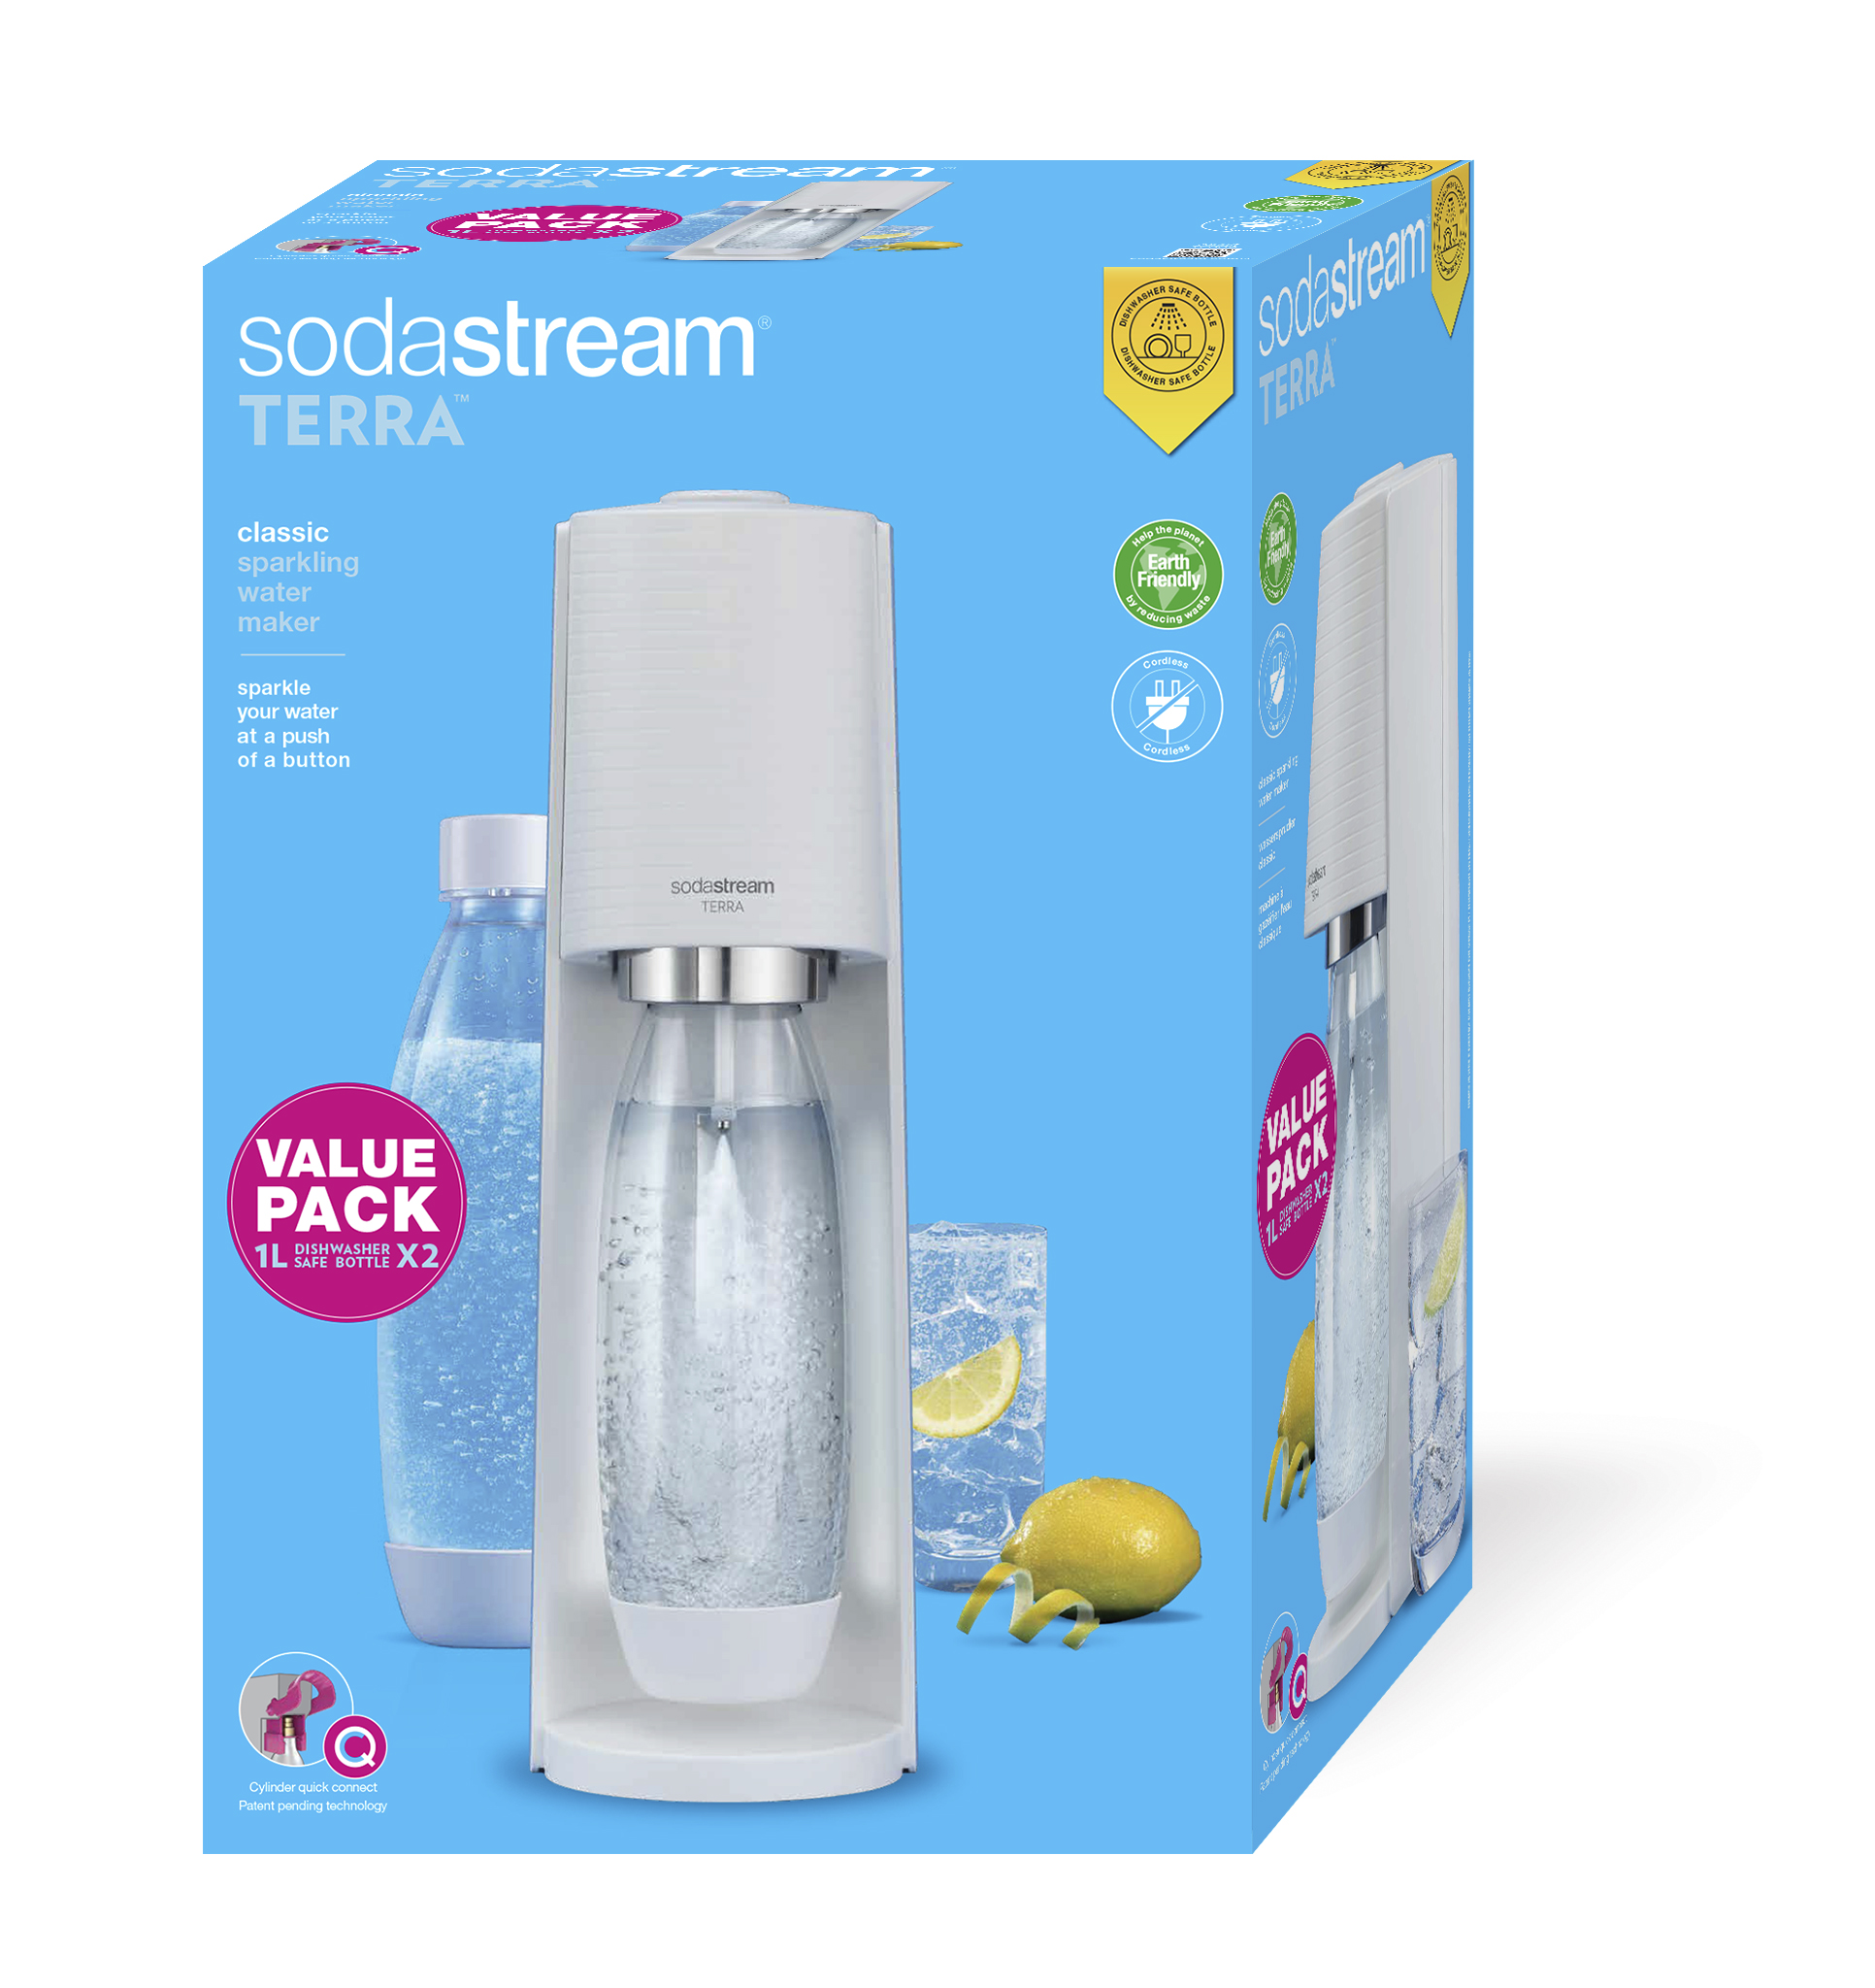 Sodastream Gasatore Terra white value pack - Casa del Rasoio